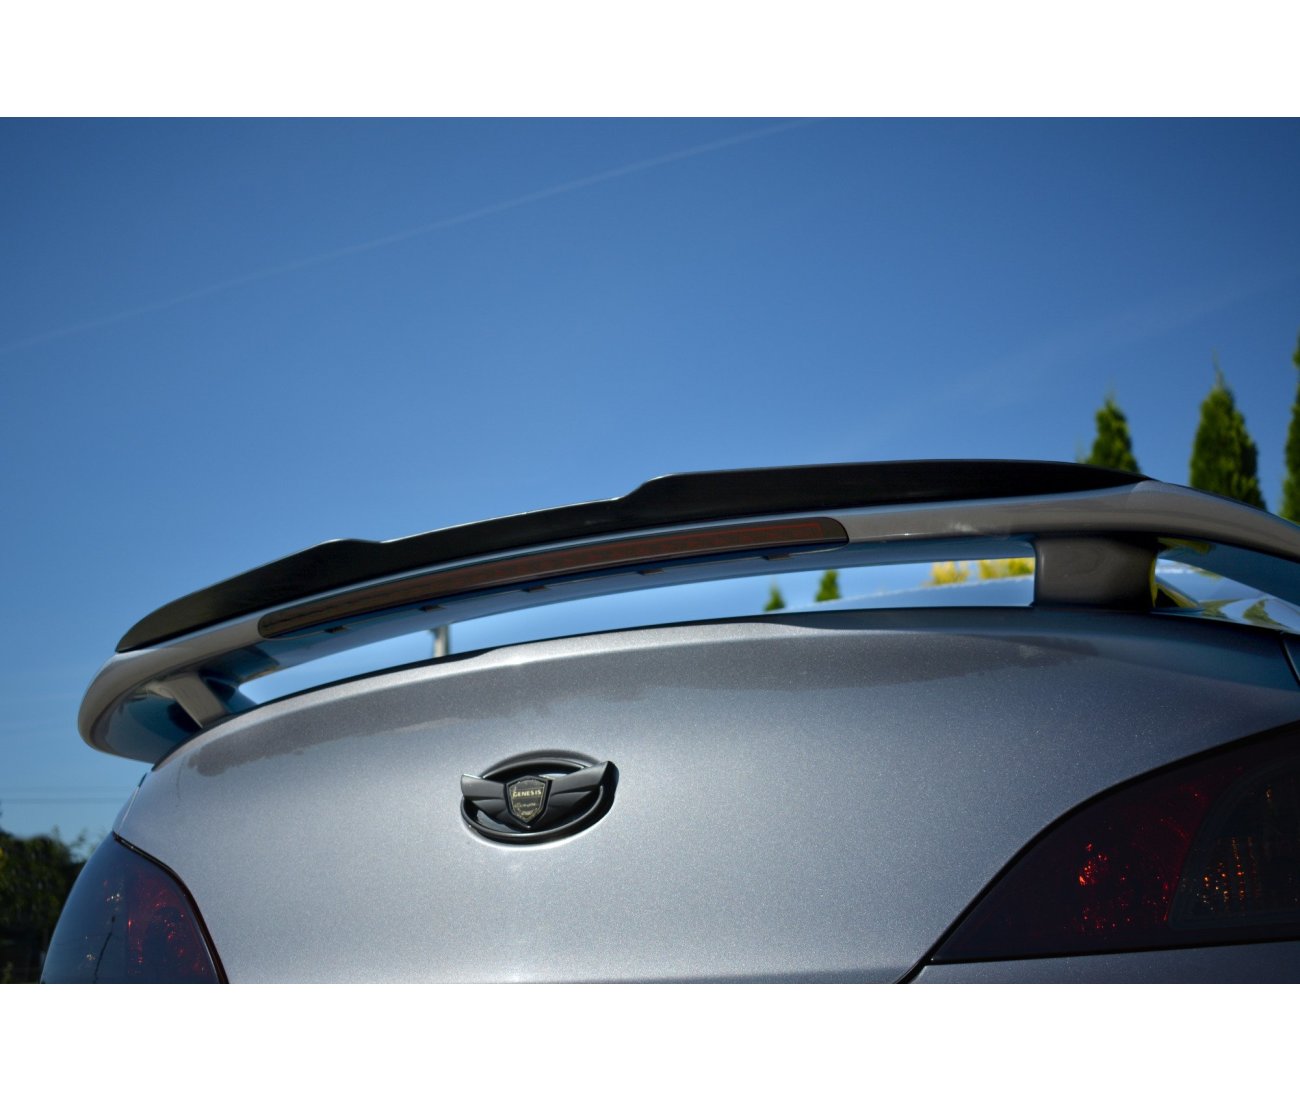 Rear spoiler attachment tear-off edge for Hyundai Genesis Coupe